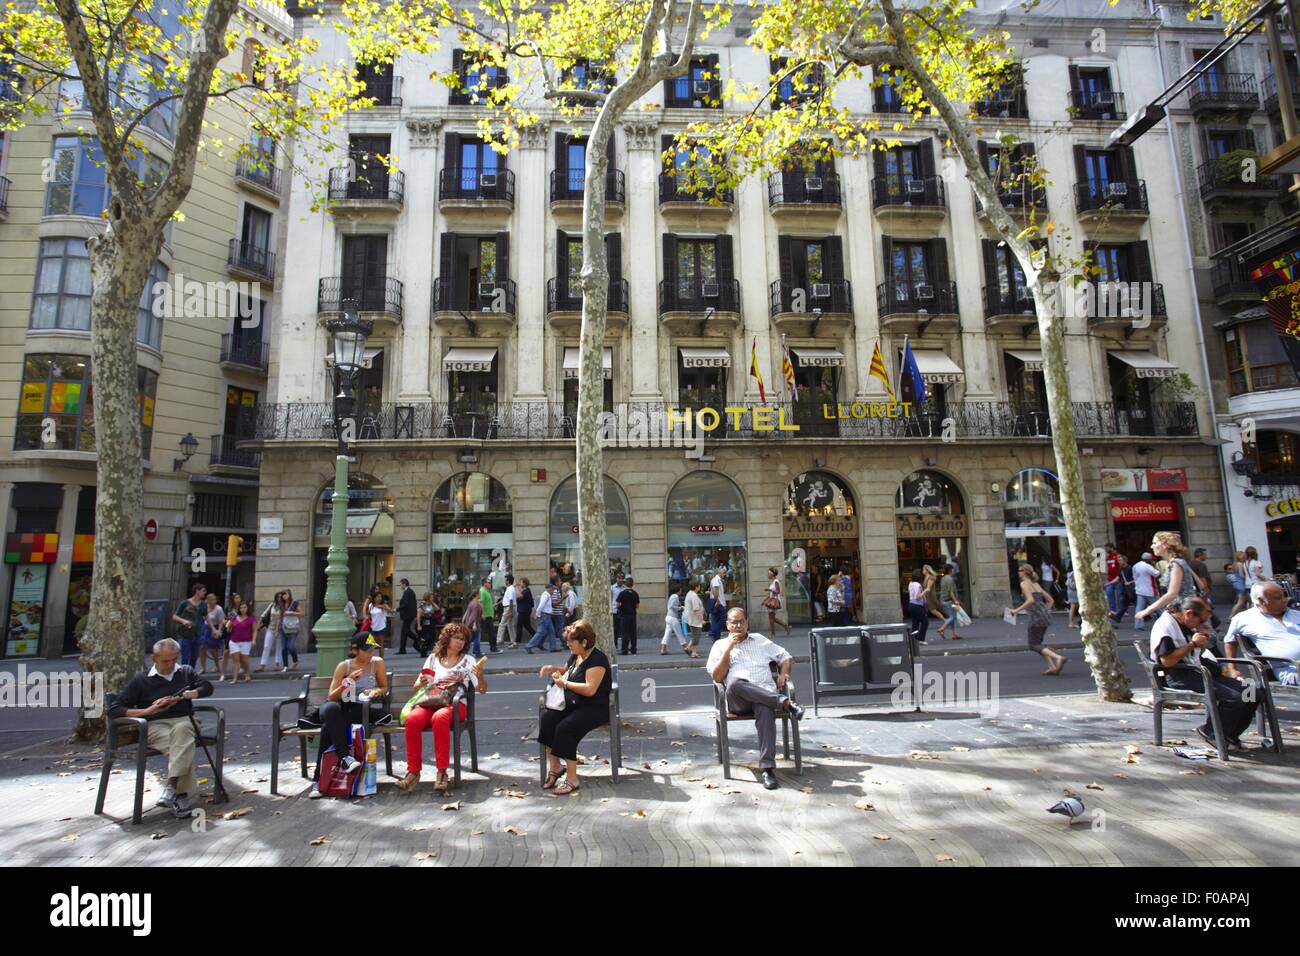 People shopping at La Rambla Las Ramblas shopping street in Barcelona, Spain Stock Photo